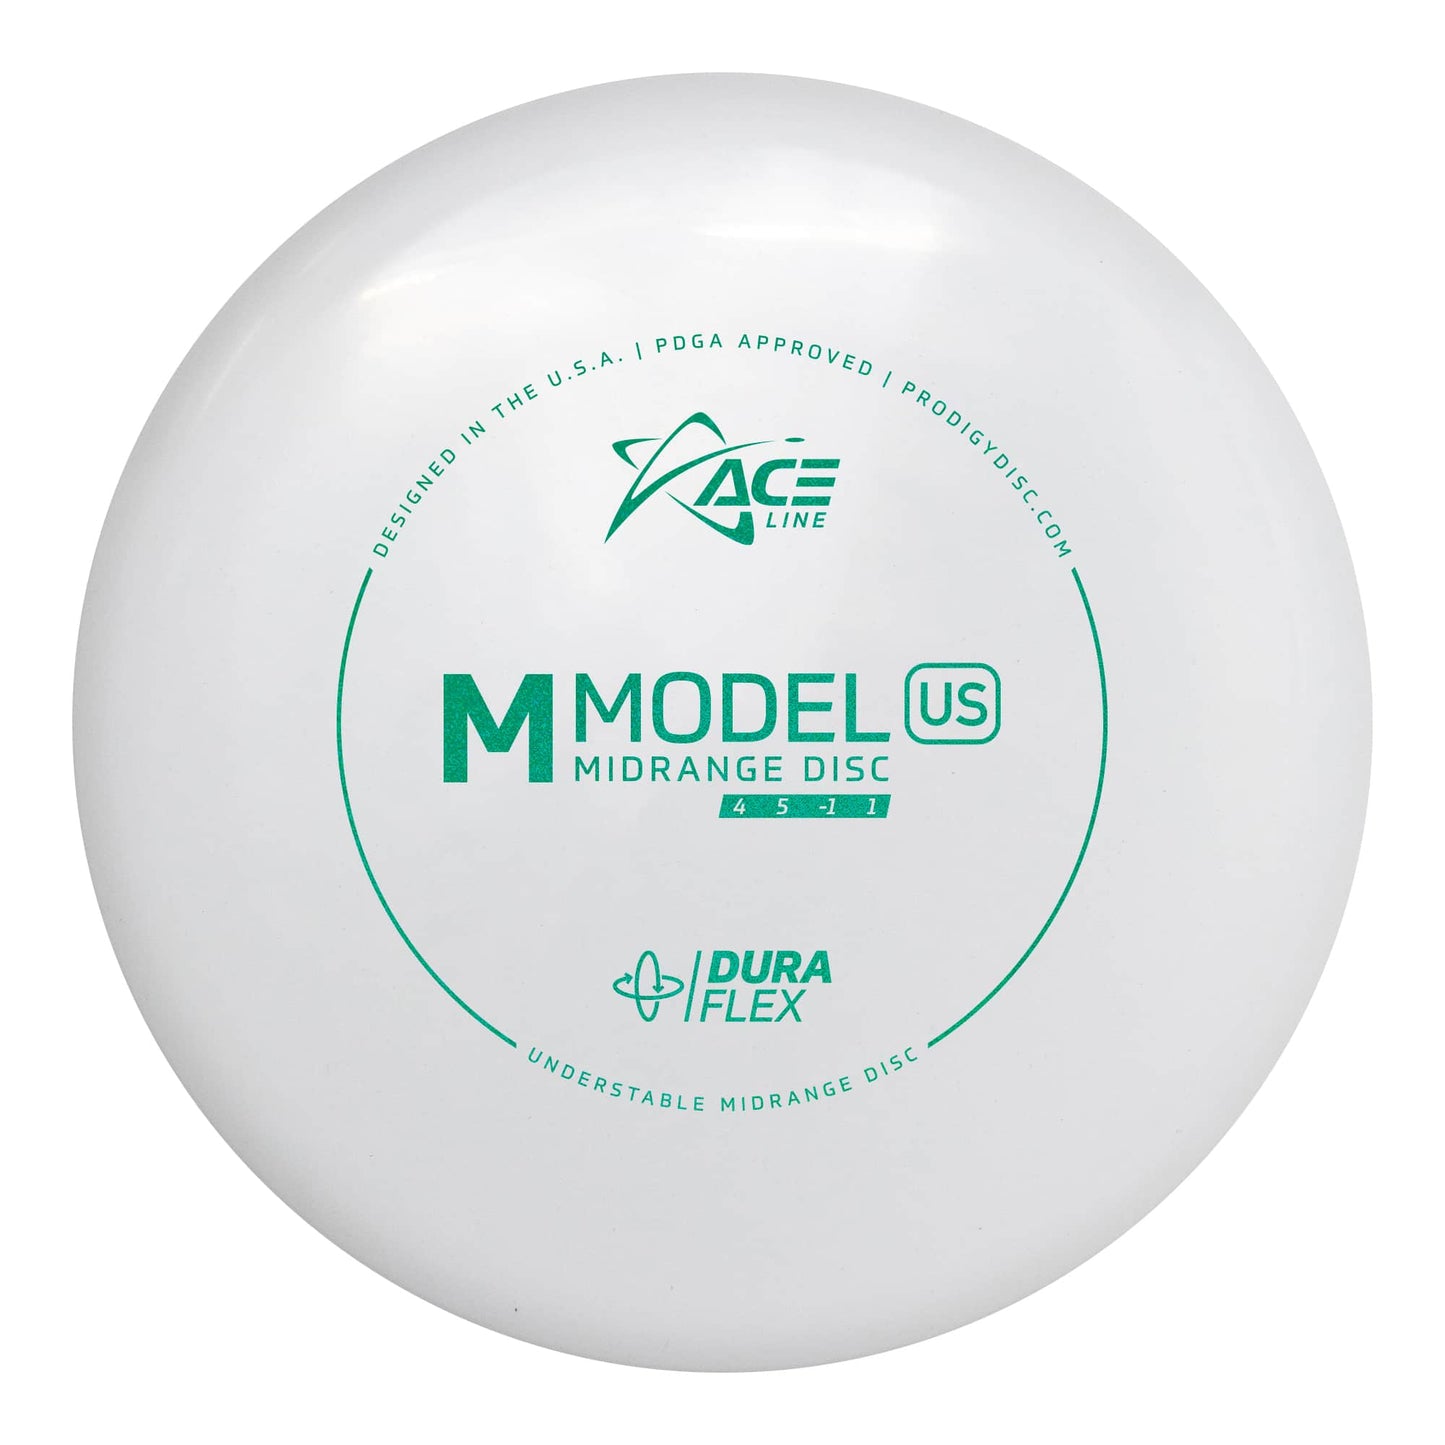 Prodigy Ace Line M Model US Midrange Disc - Duraflex Plastic